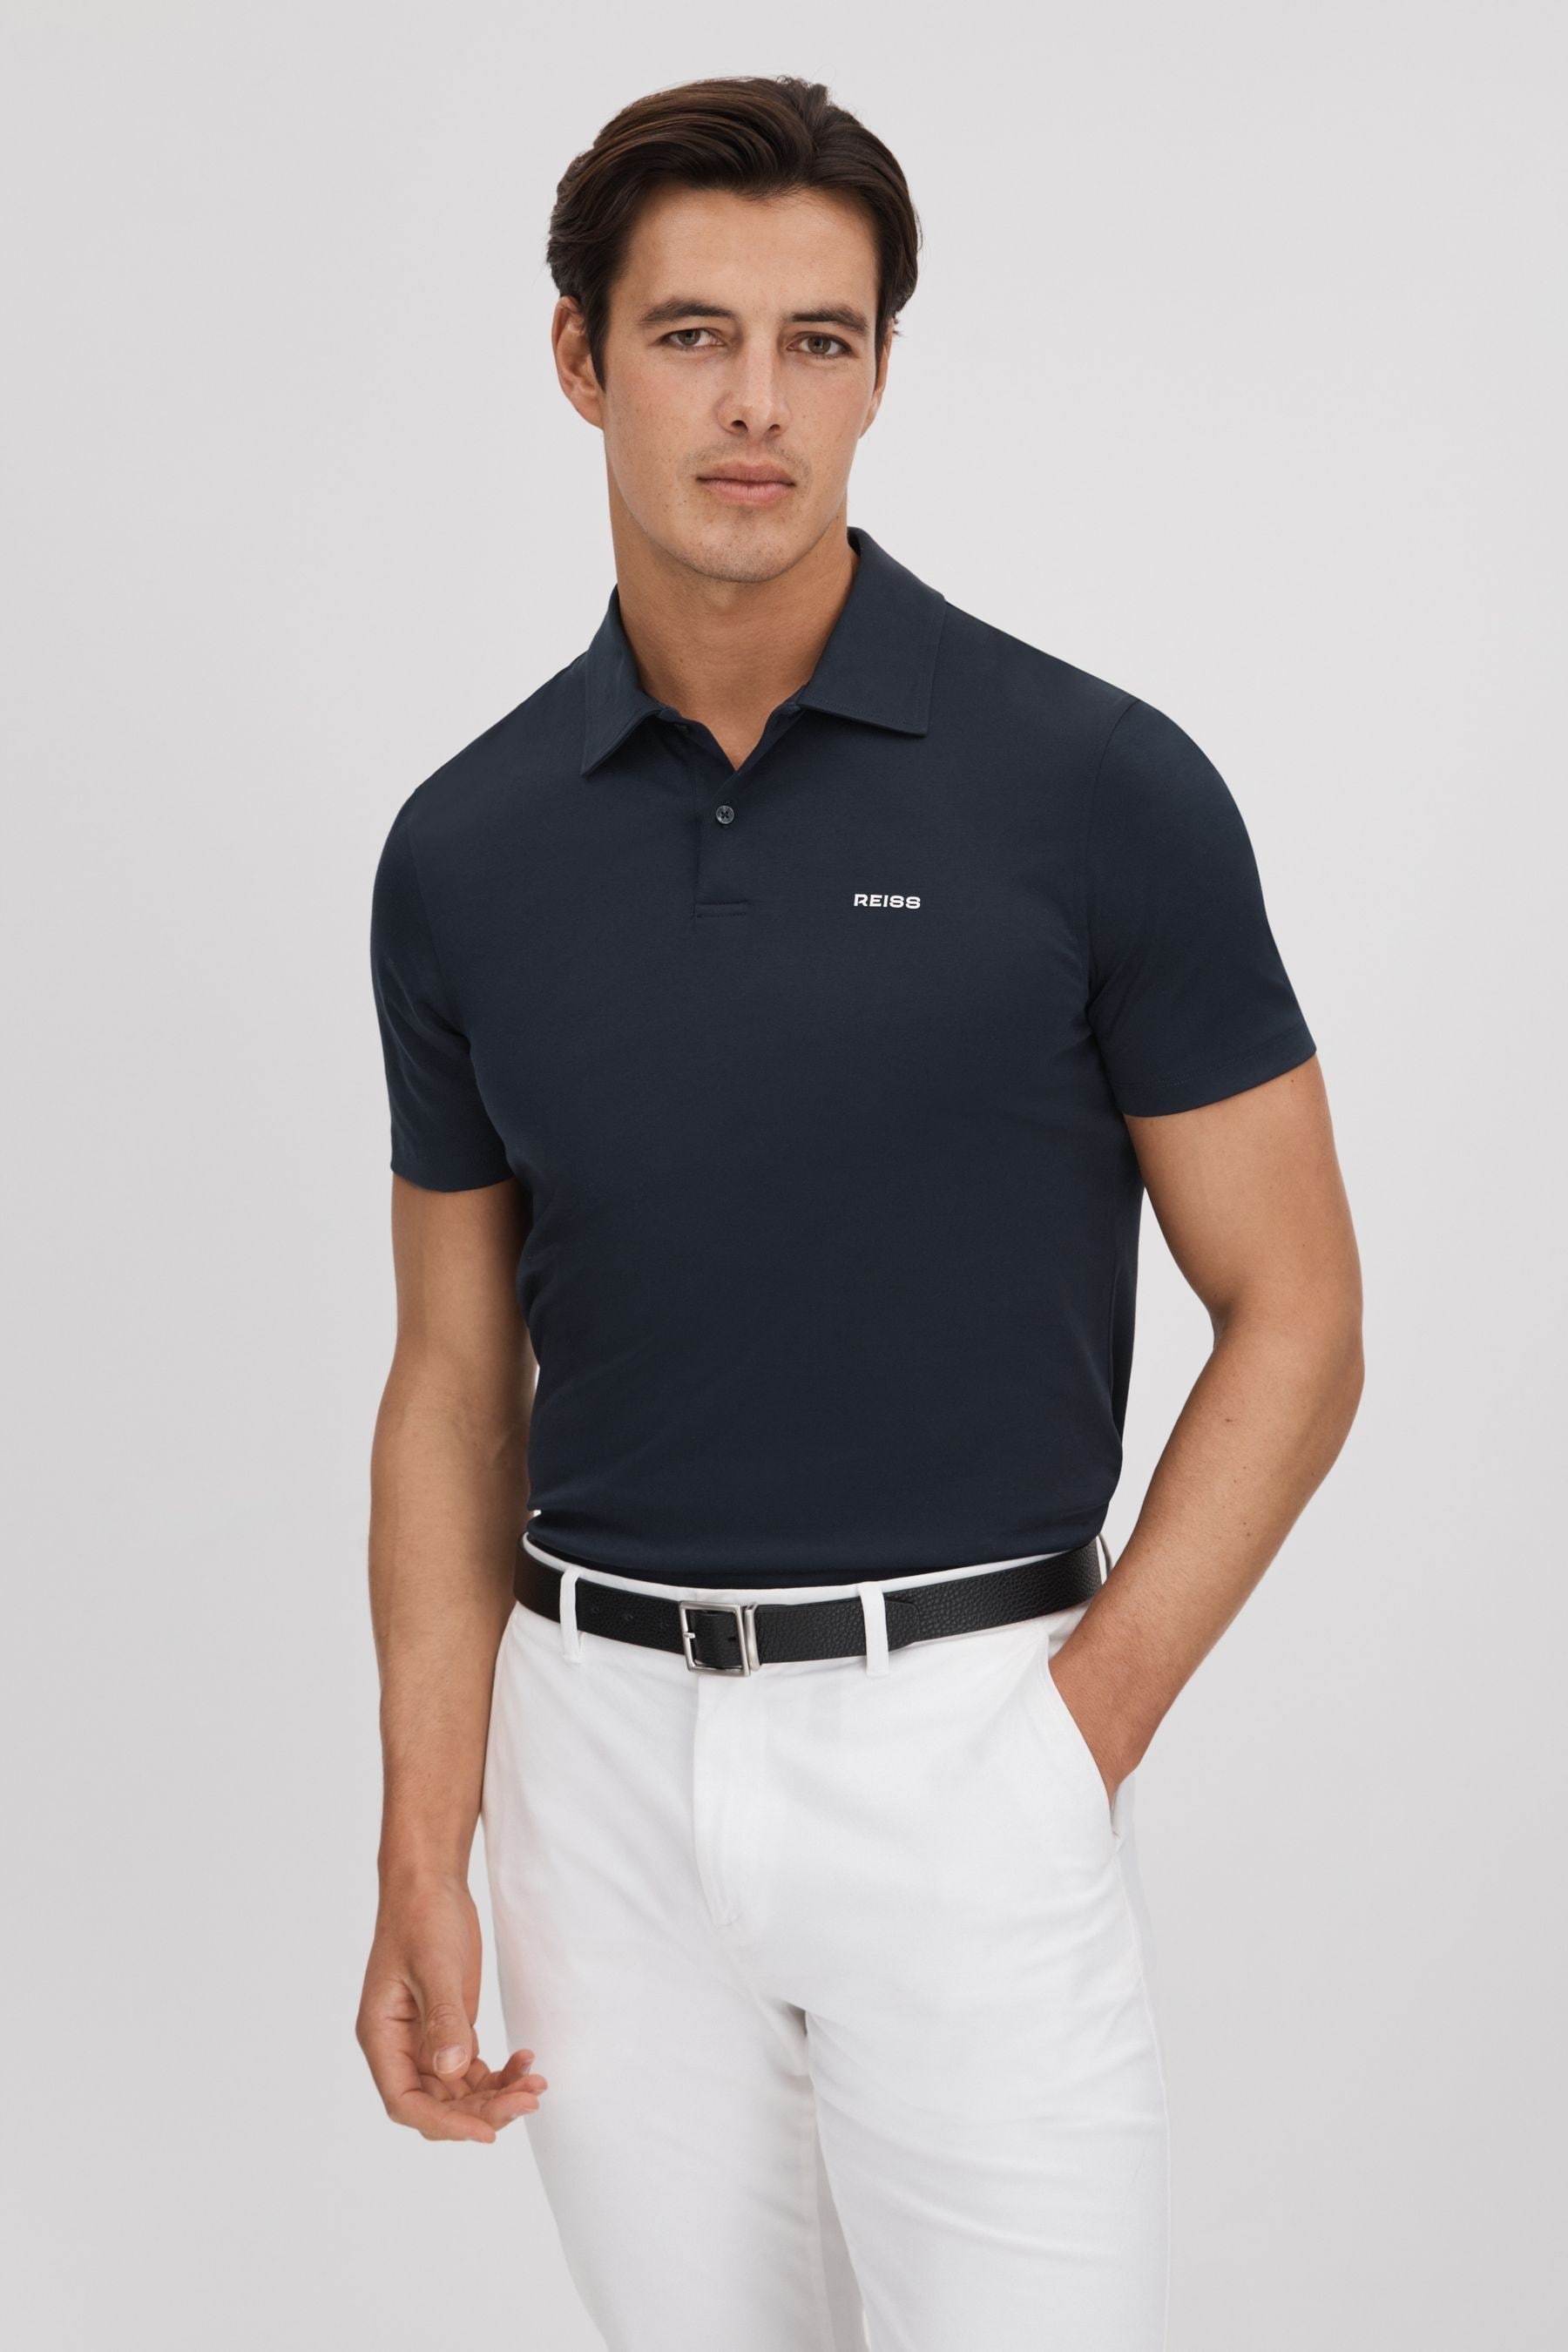 Reiss Owens - Navy Slim Fit Cotton Polo Shirt, L